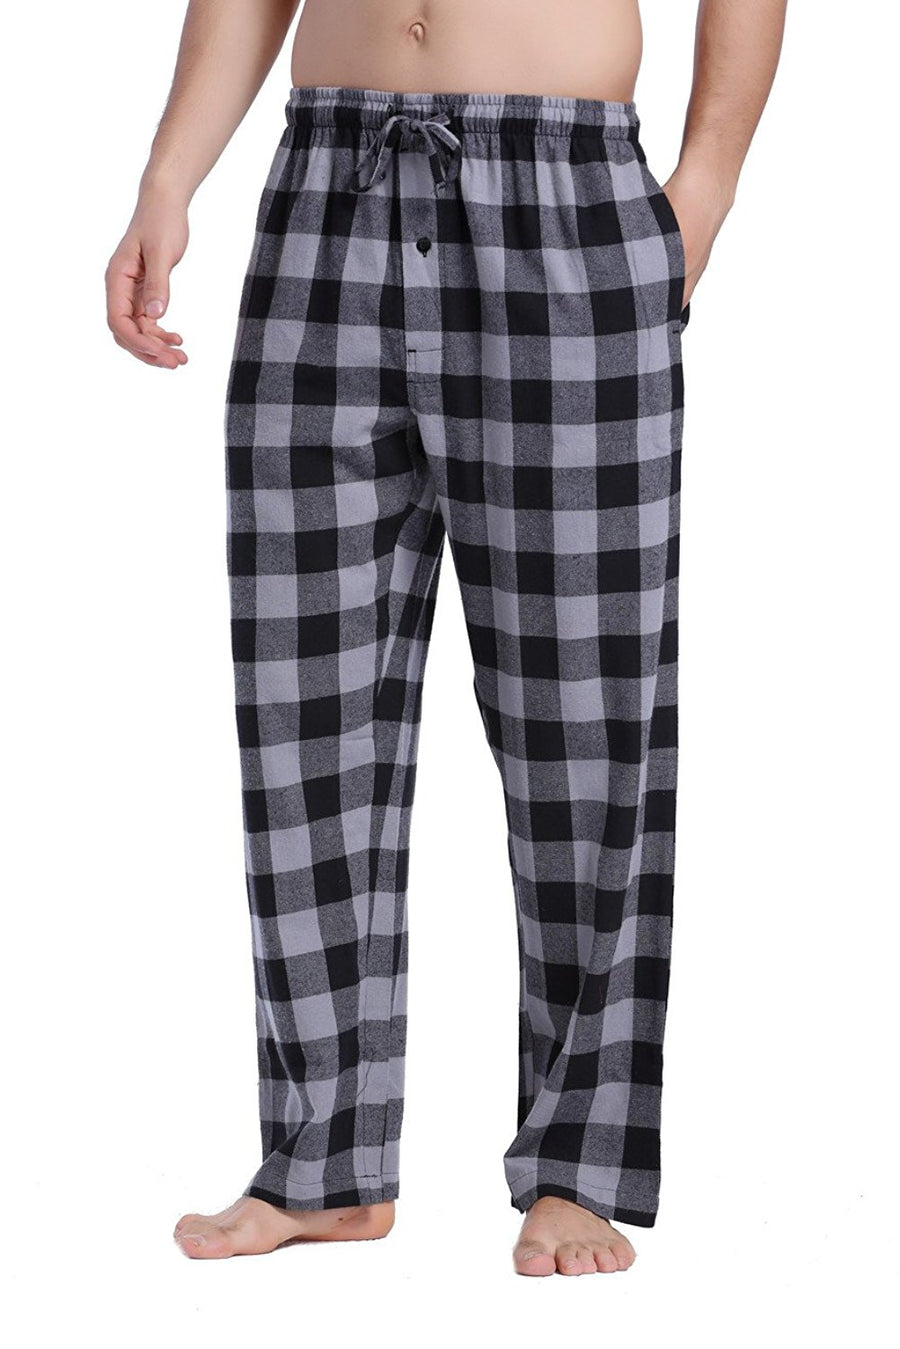 Men's Flannel Pajamas - Plaid Pajama Pants for Men (Black / Red - Buffalo  Plaid, Medium) - Walmart.com